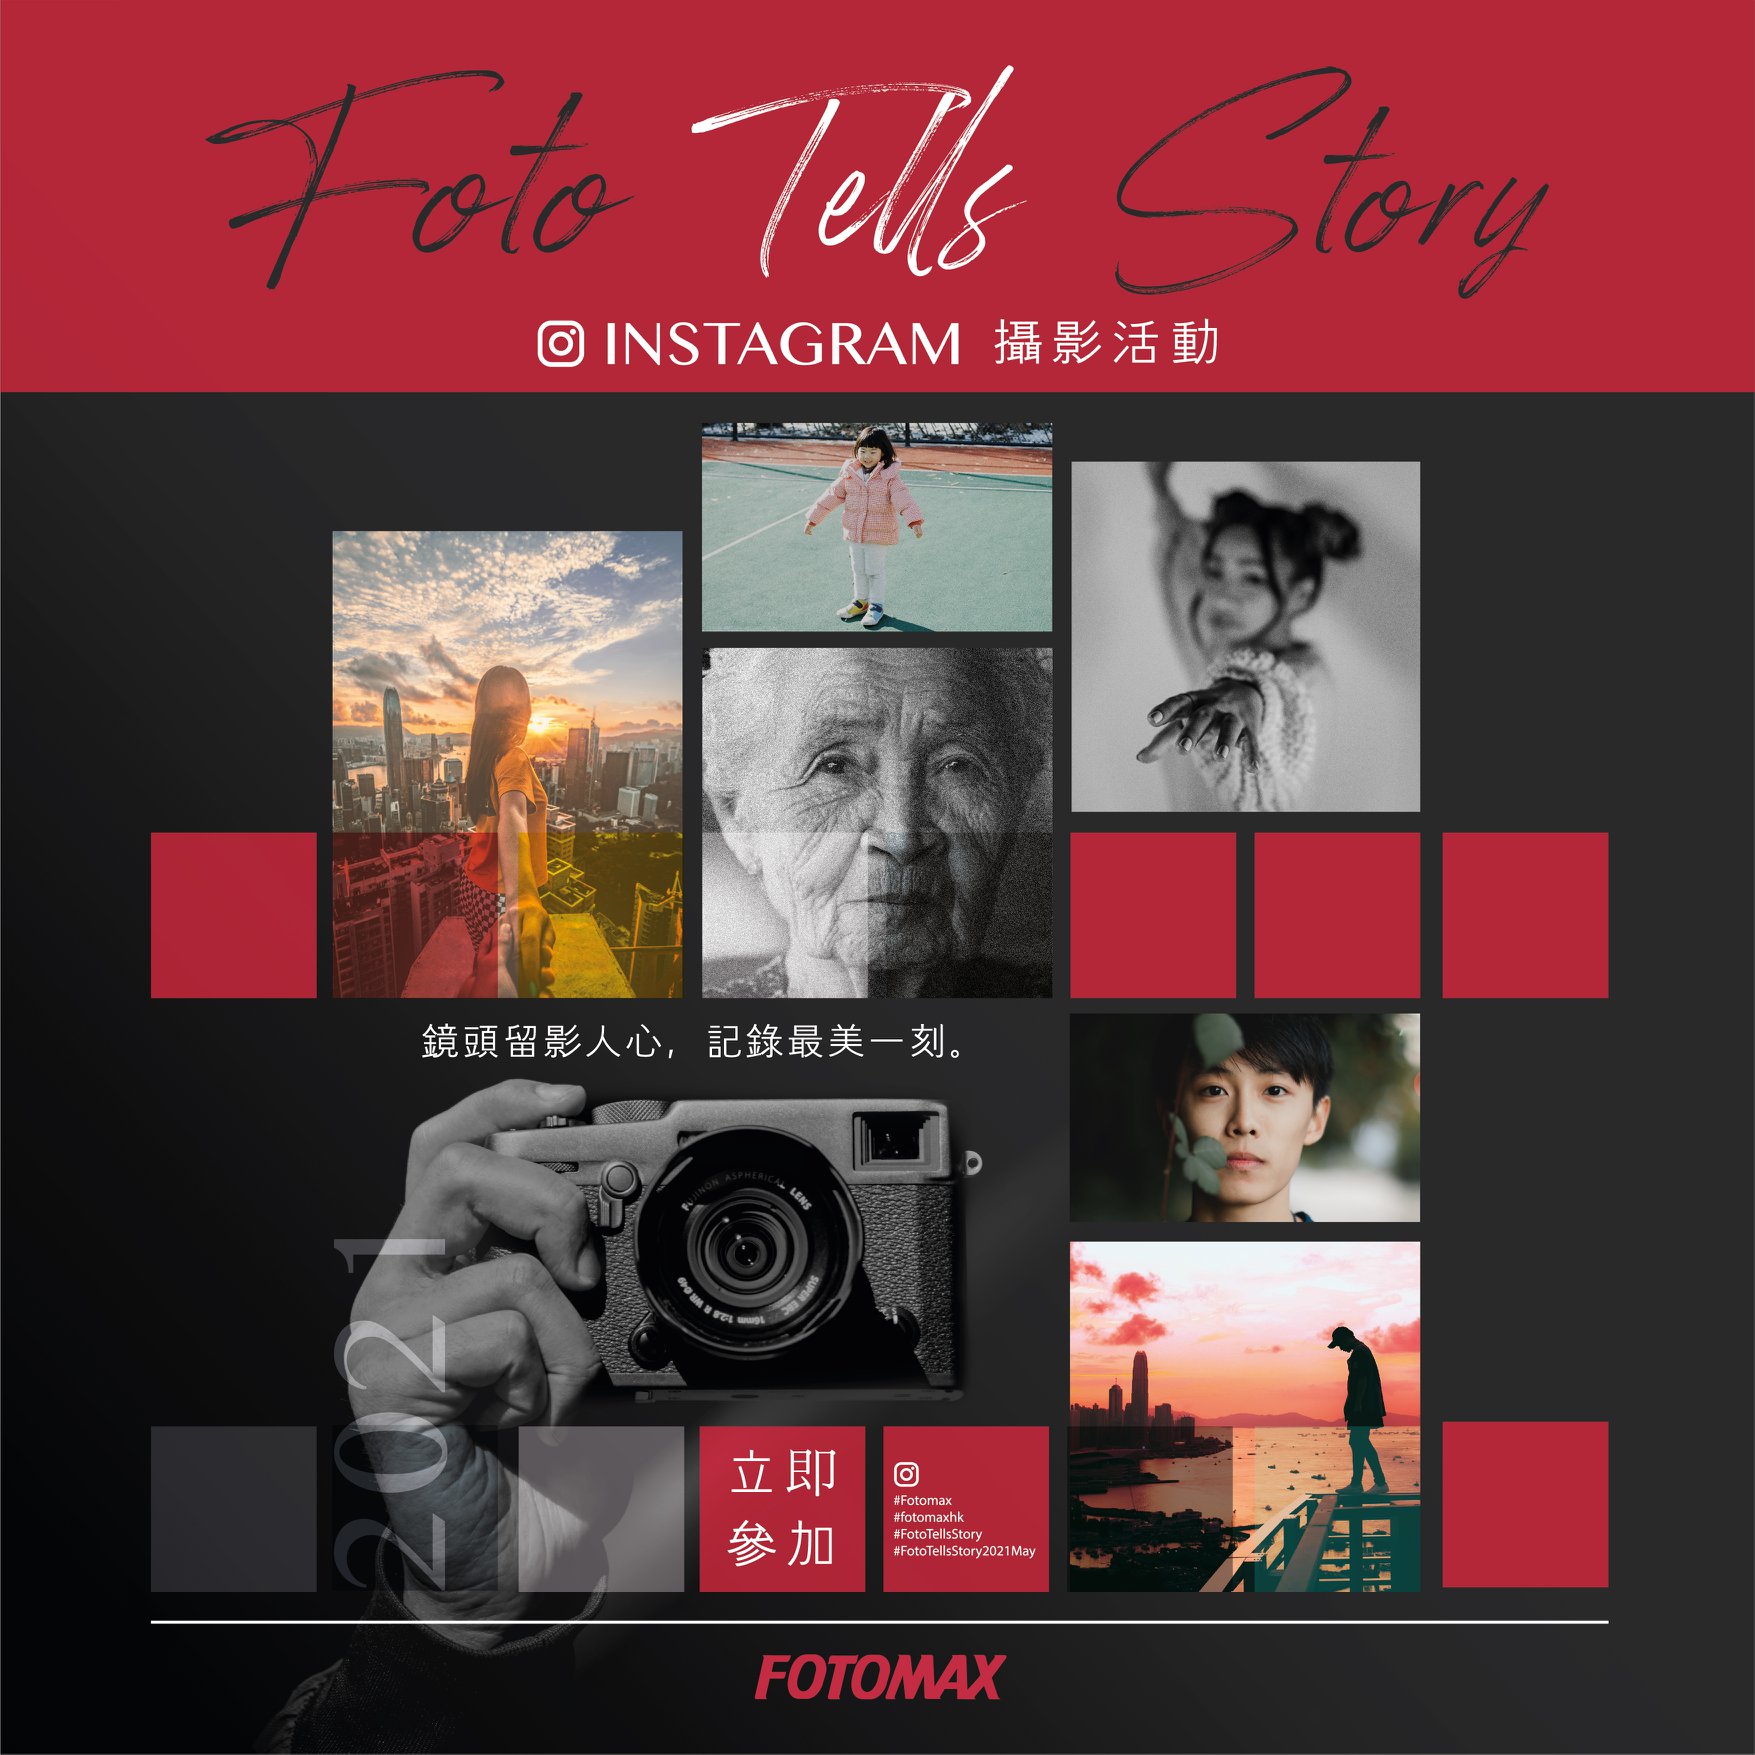 『Fotomax Foto Tells Story Instagram 攝影活動』​